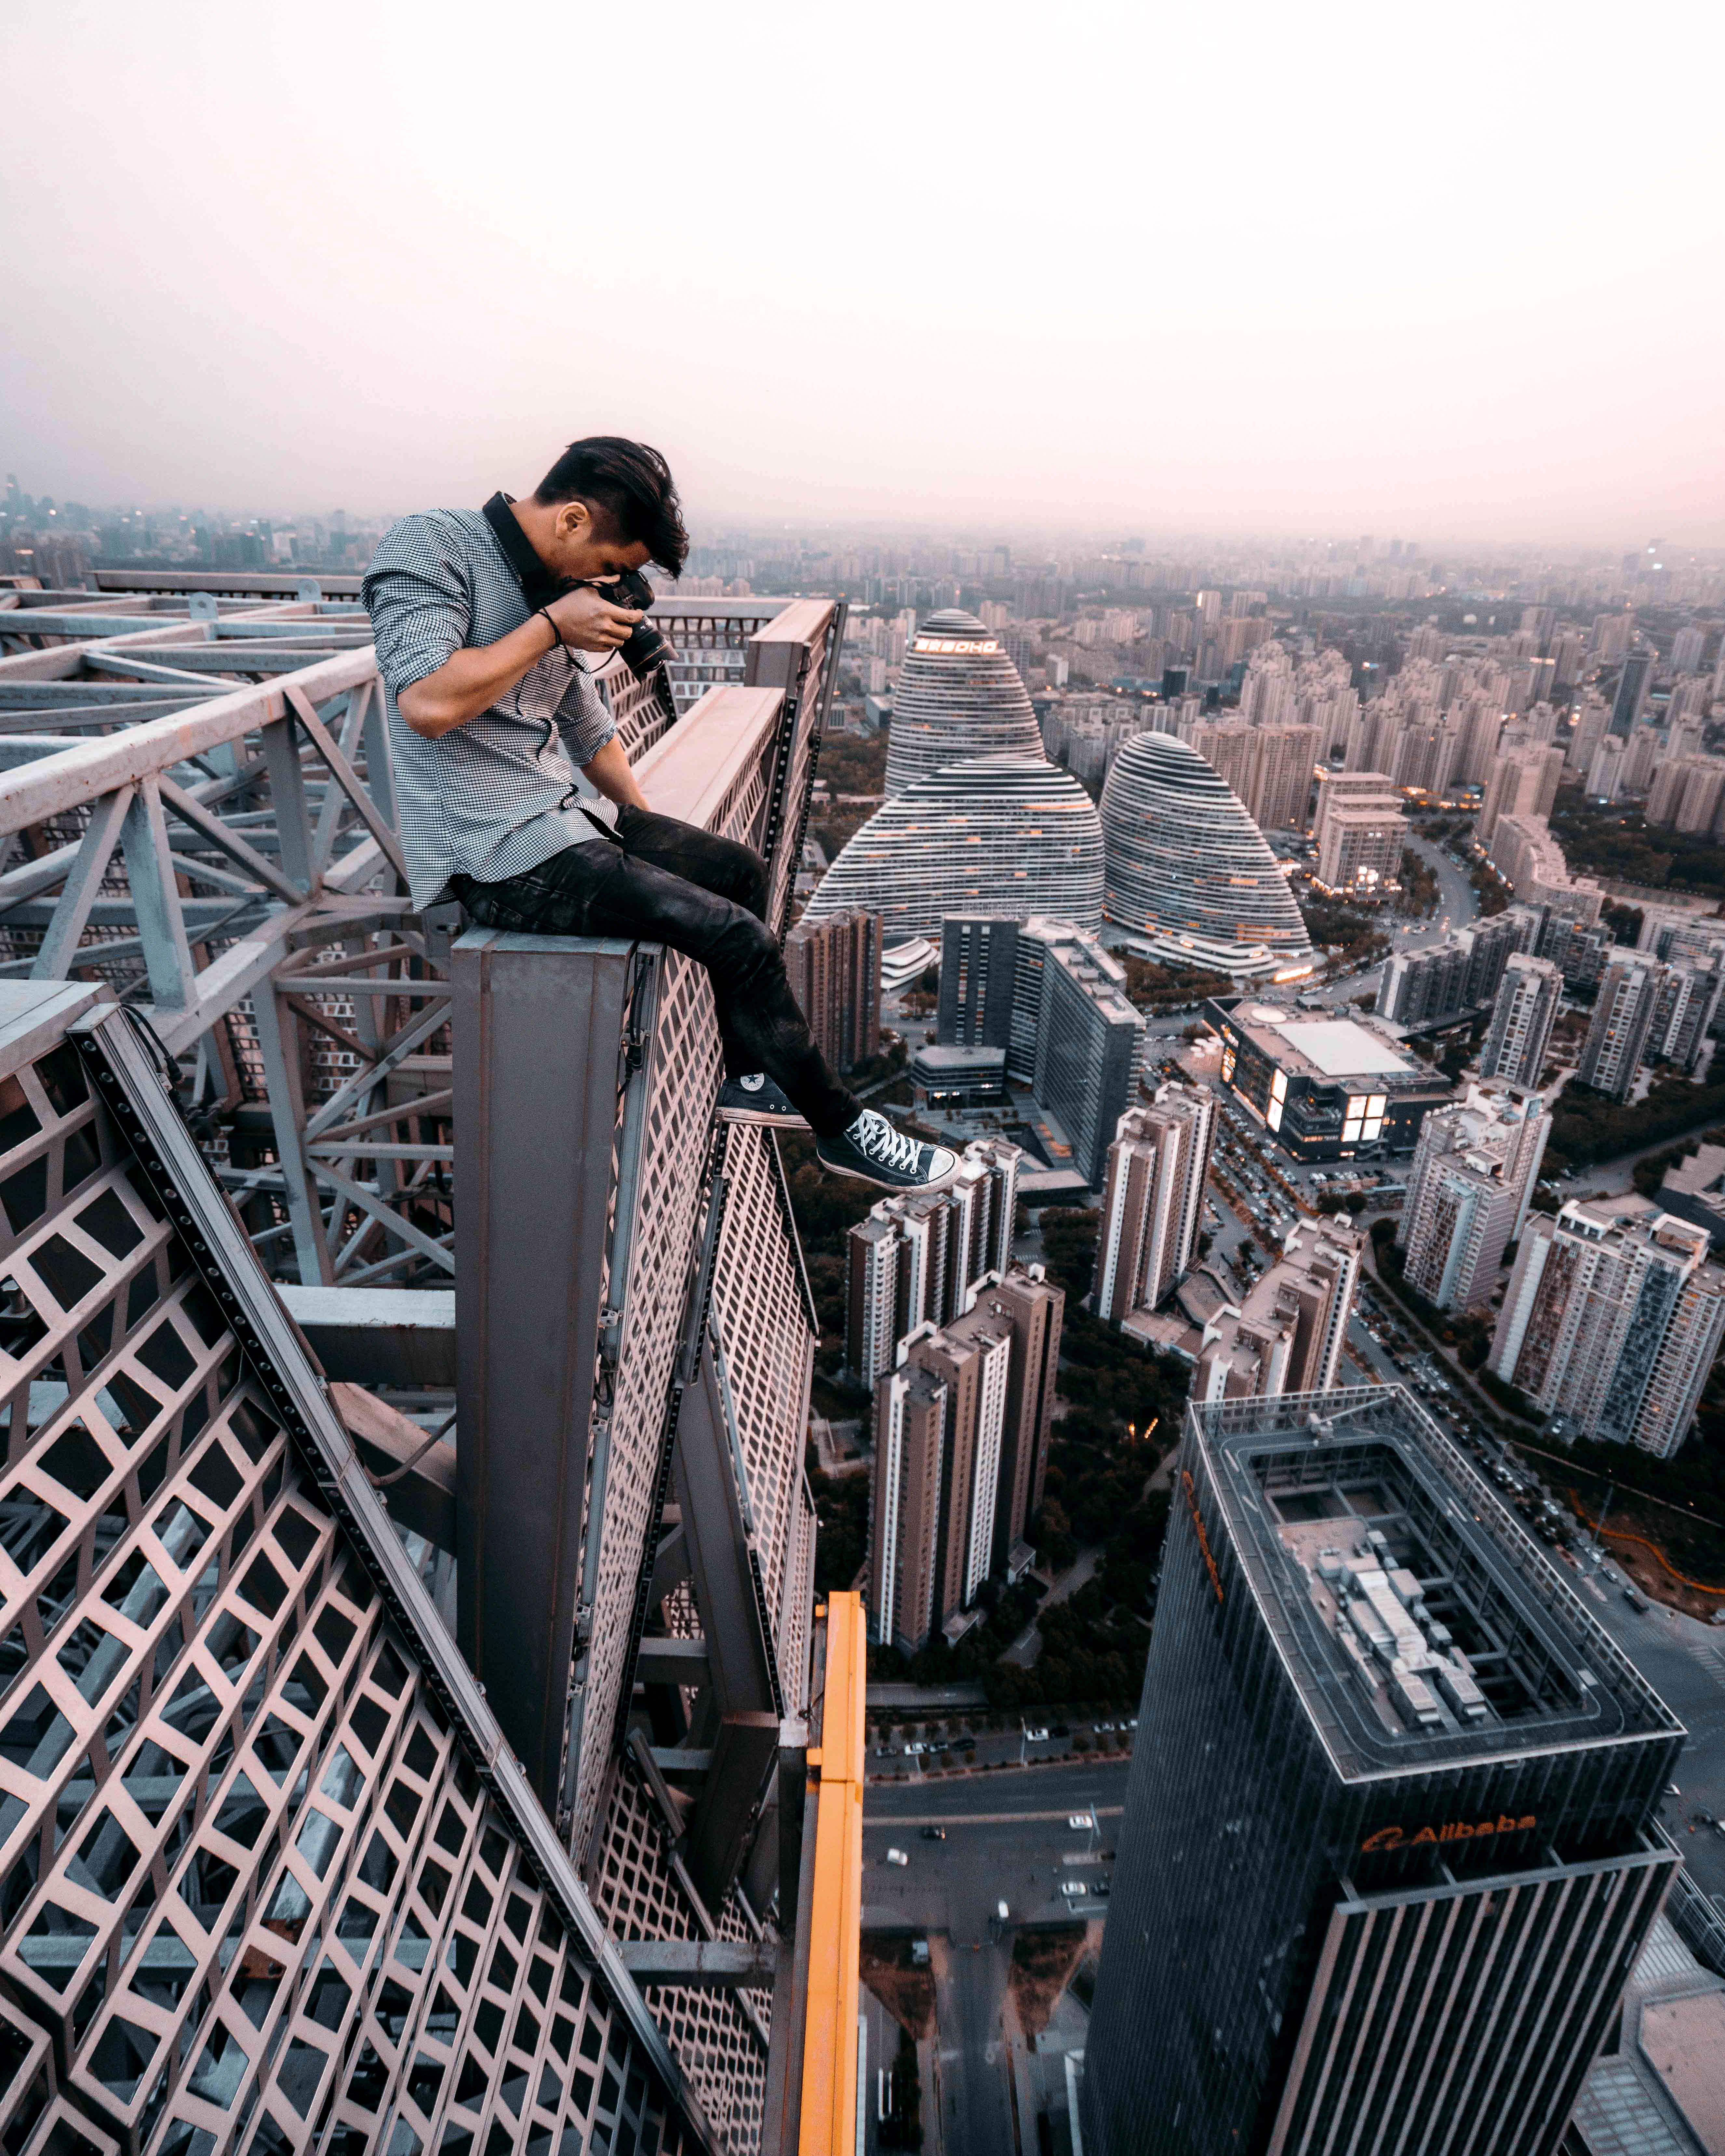 man sitting on top of building taking photo below, extreme, dangerous